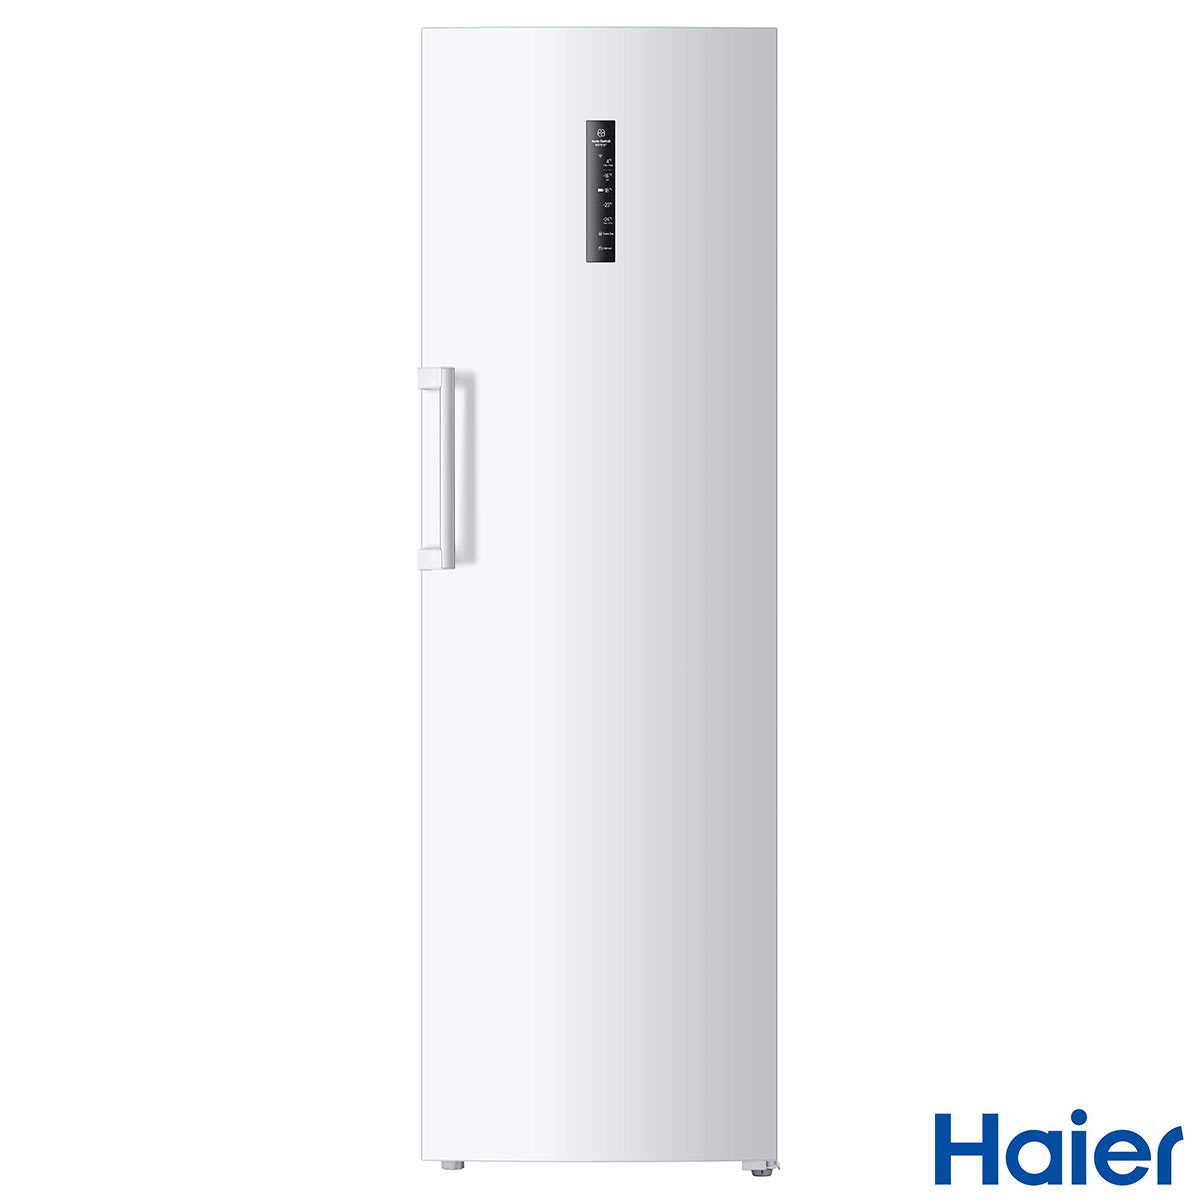 Haier H3F-320WSAAU1, InstaSwitch Freezer F Rated in White